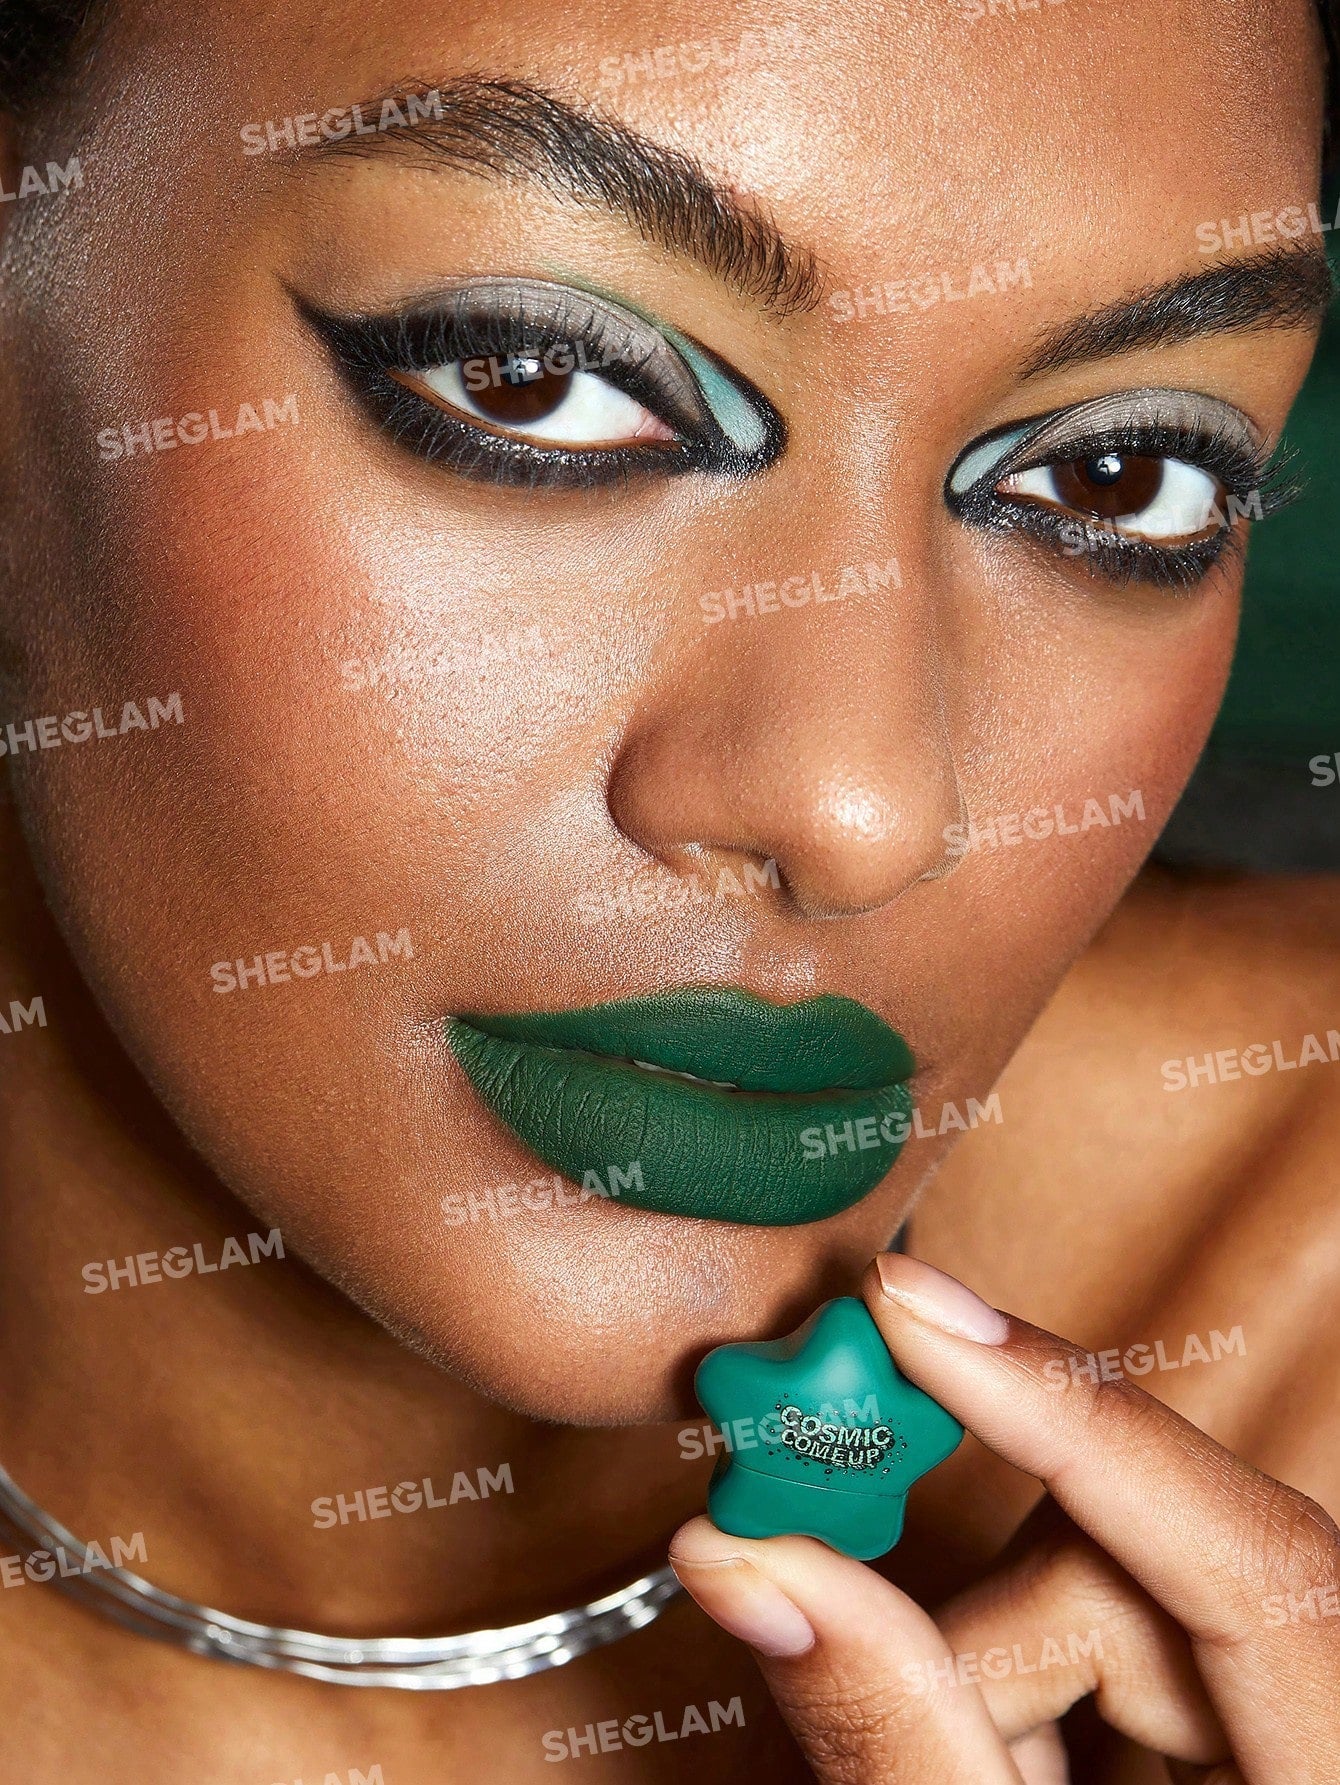 SHEGLAM Hi-Beam Mini Lipstick Set-Novo Set 4 In 1 Matte And Hydrating Bold Lipstick - Negative Apparel